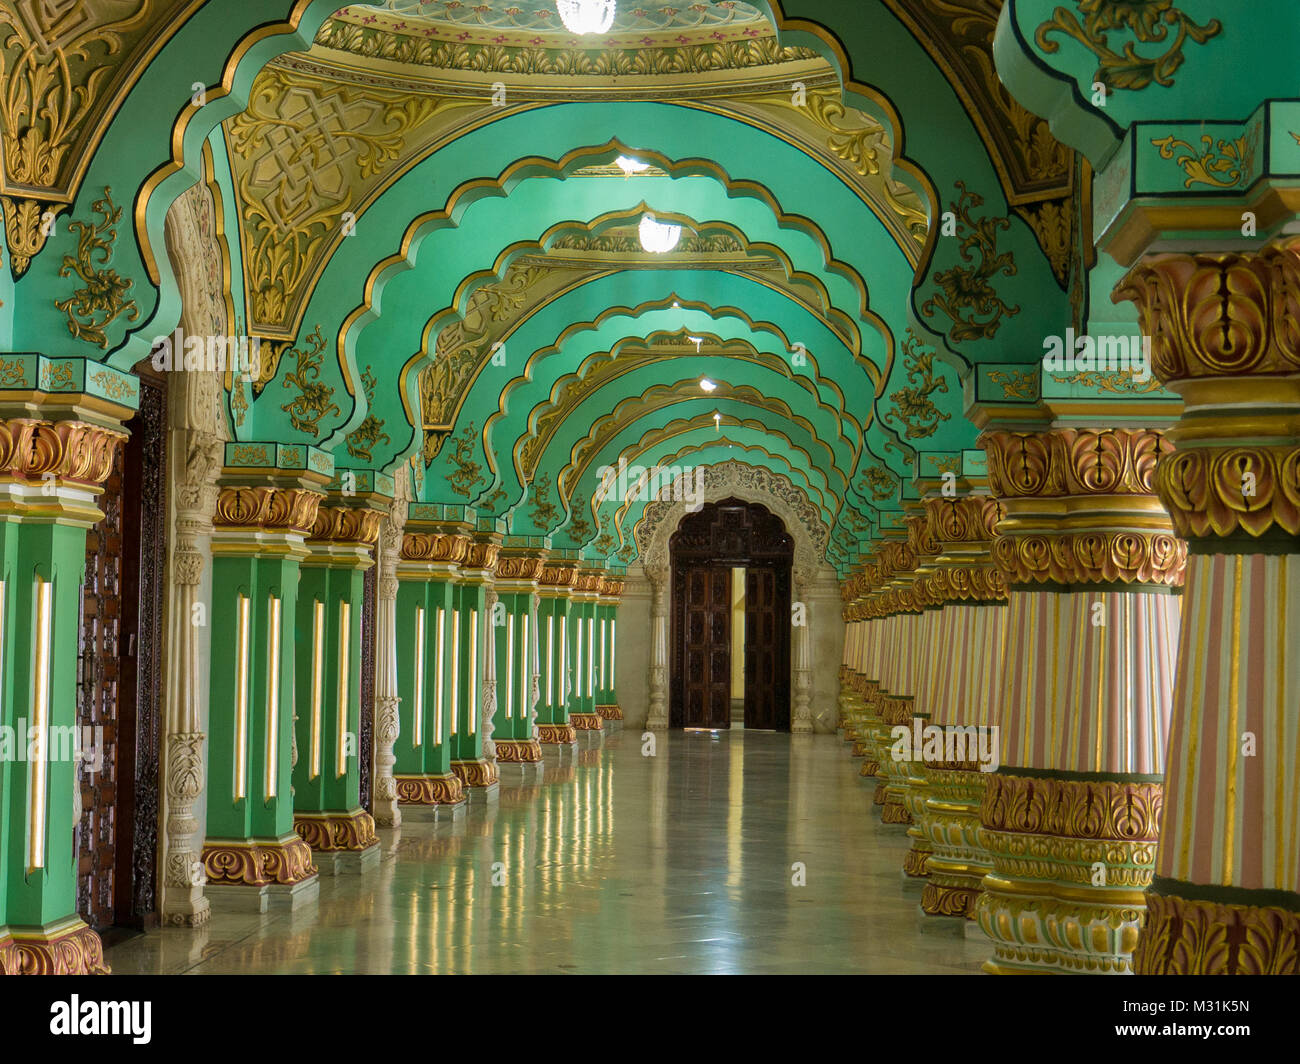 MYSORE, INDIA - January 11 2018: Colorful ornate interior halls of royal Mysore Palace, Karnataka, India Stock Photo